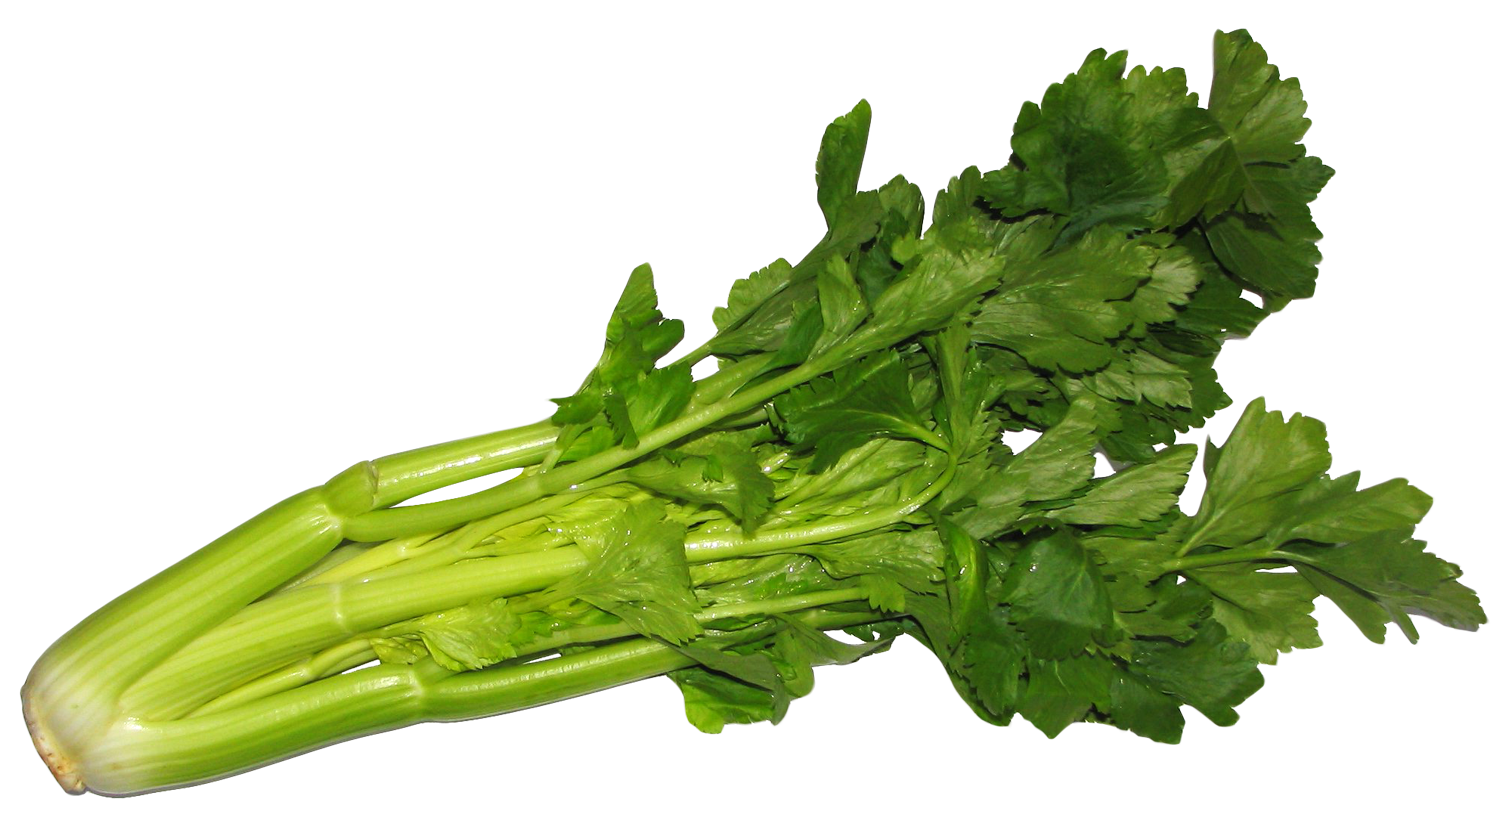 Celery PNG Image